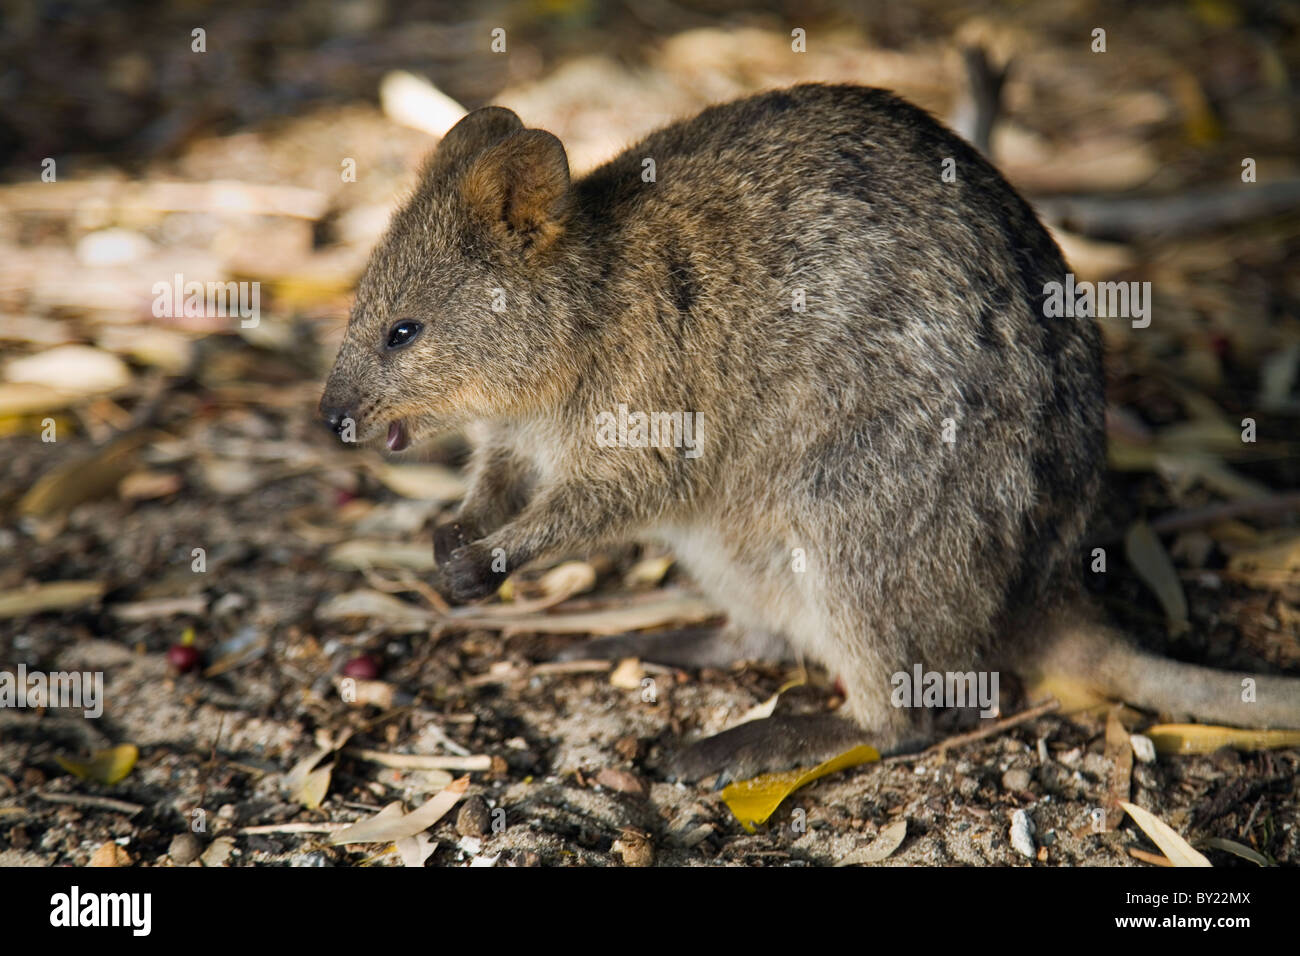 Small marsupial -Fotos und -Bildmaterial in hoher Auflösung – Alamy